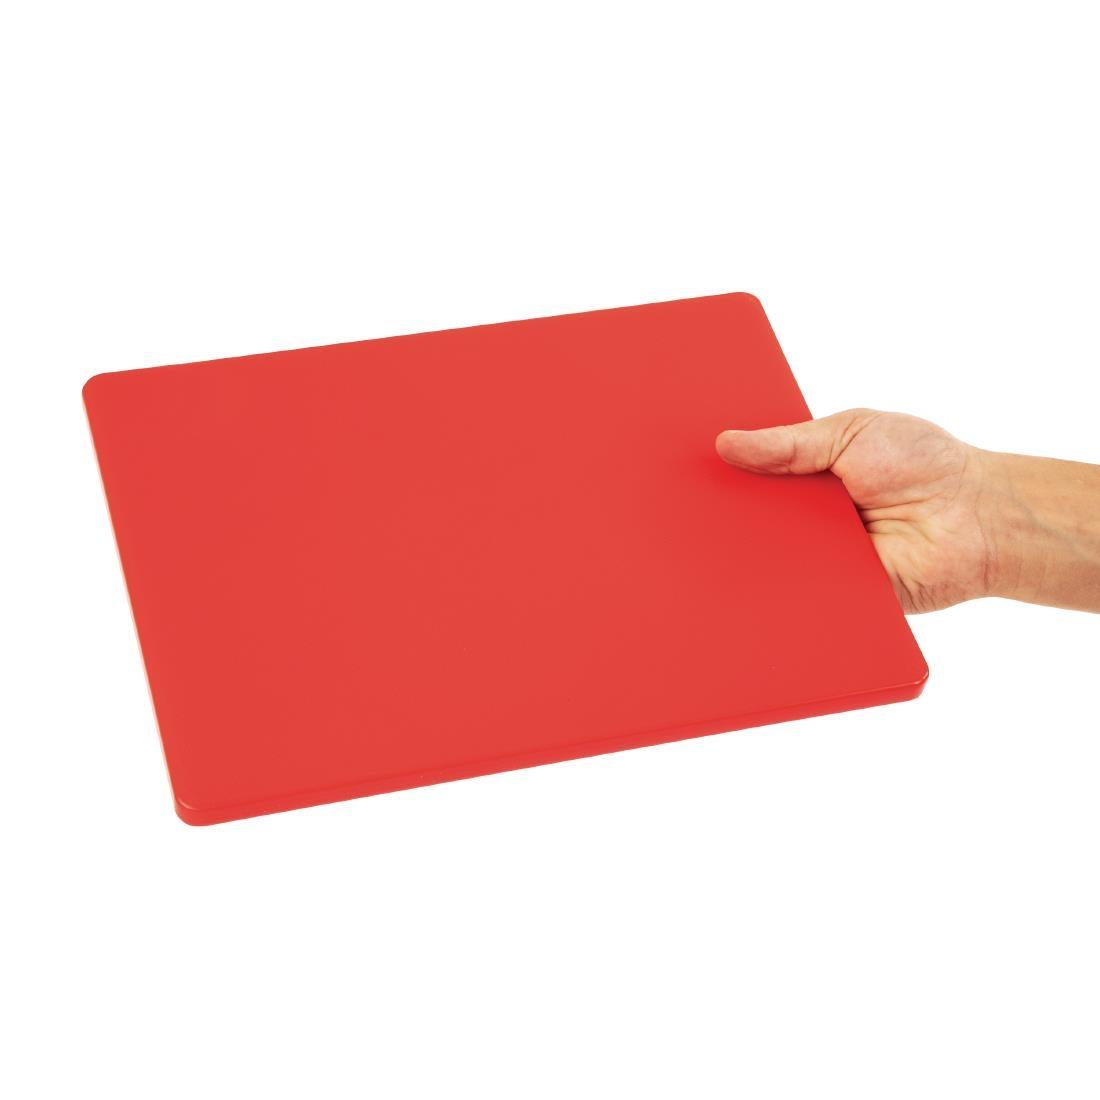 Hygiplas Low Density Red Chopping Board Small - GH794  - 4